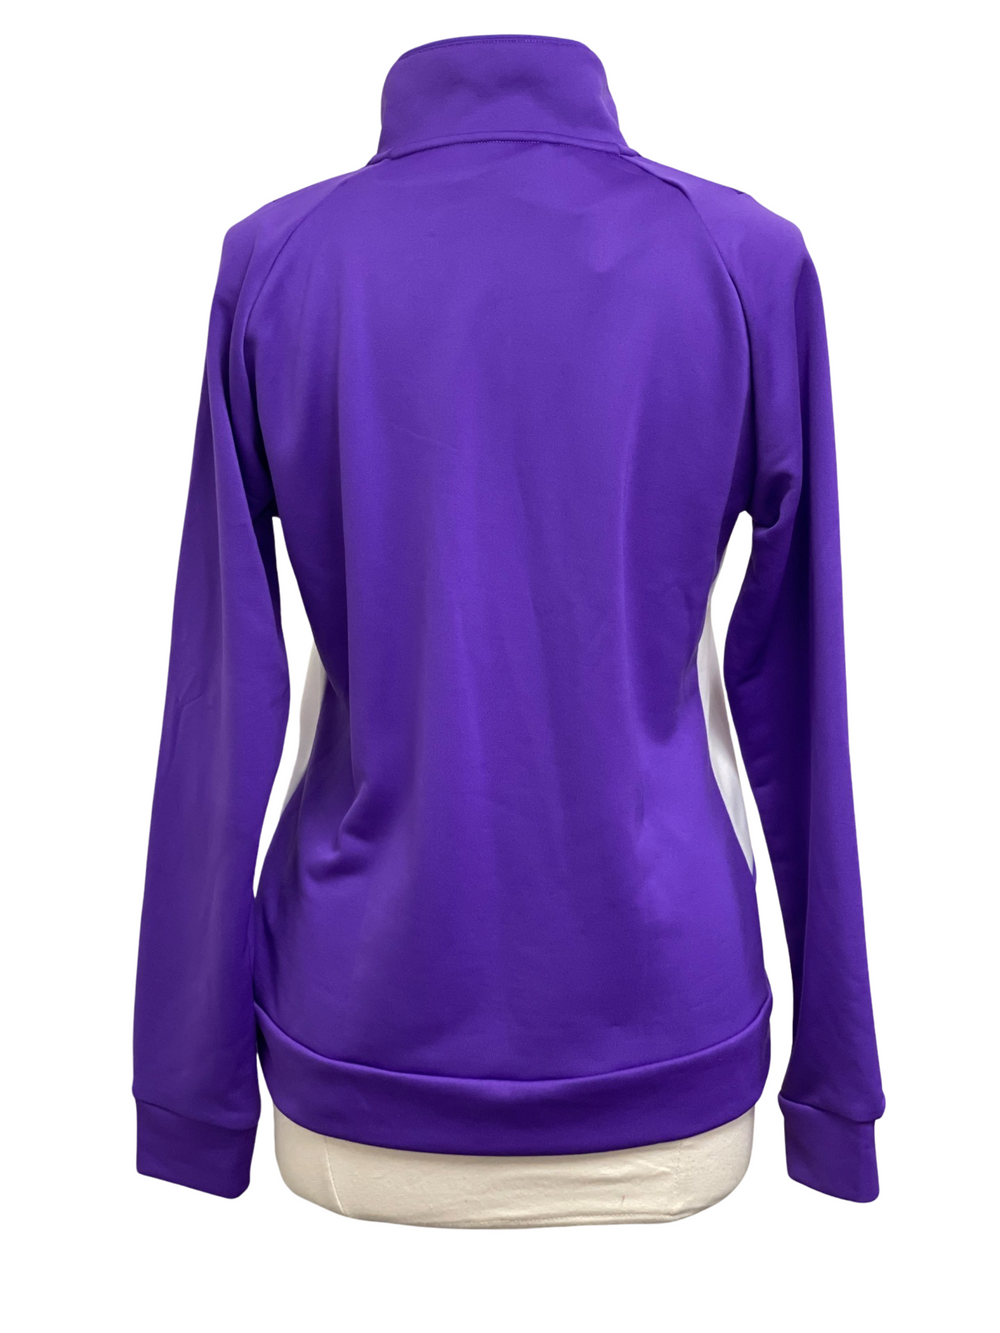 Adidas Pullover - White/Purple - Large - Skorzie